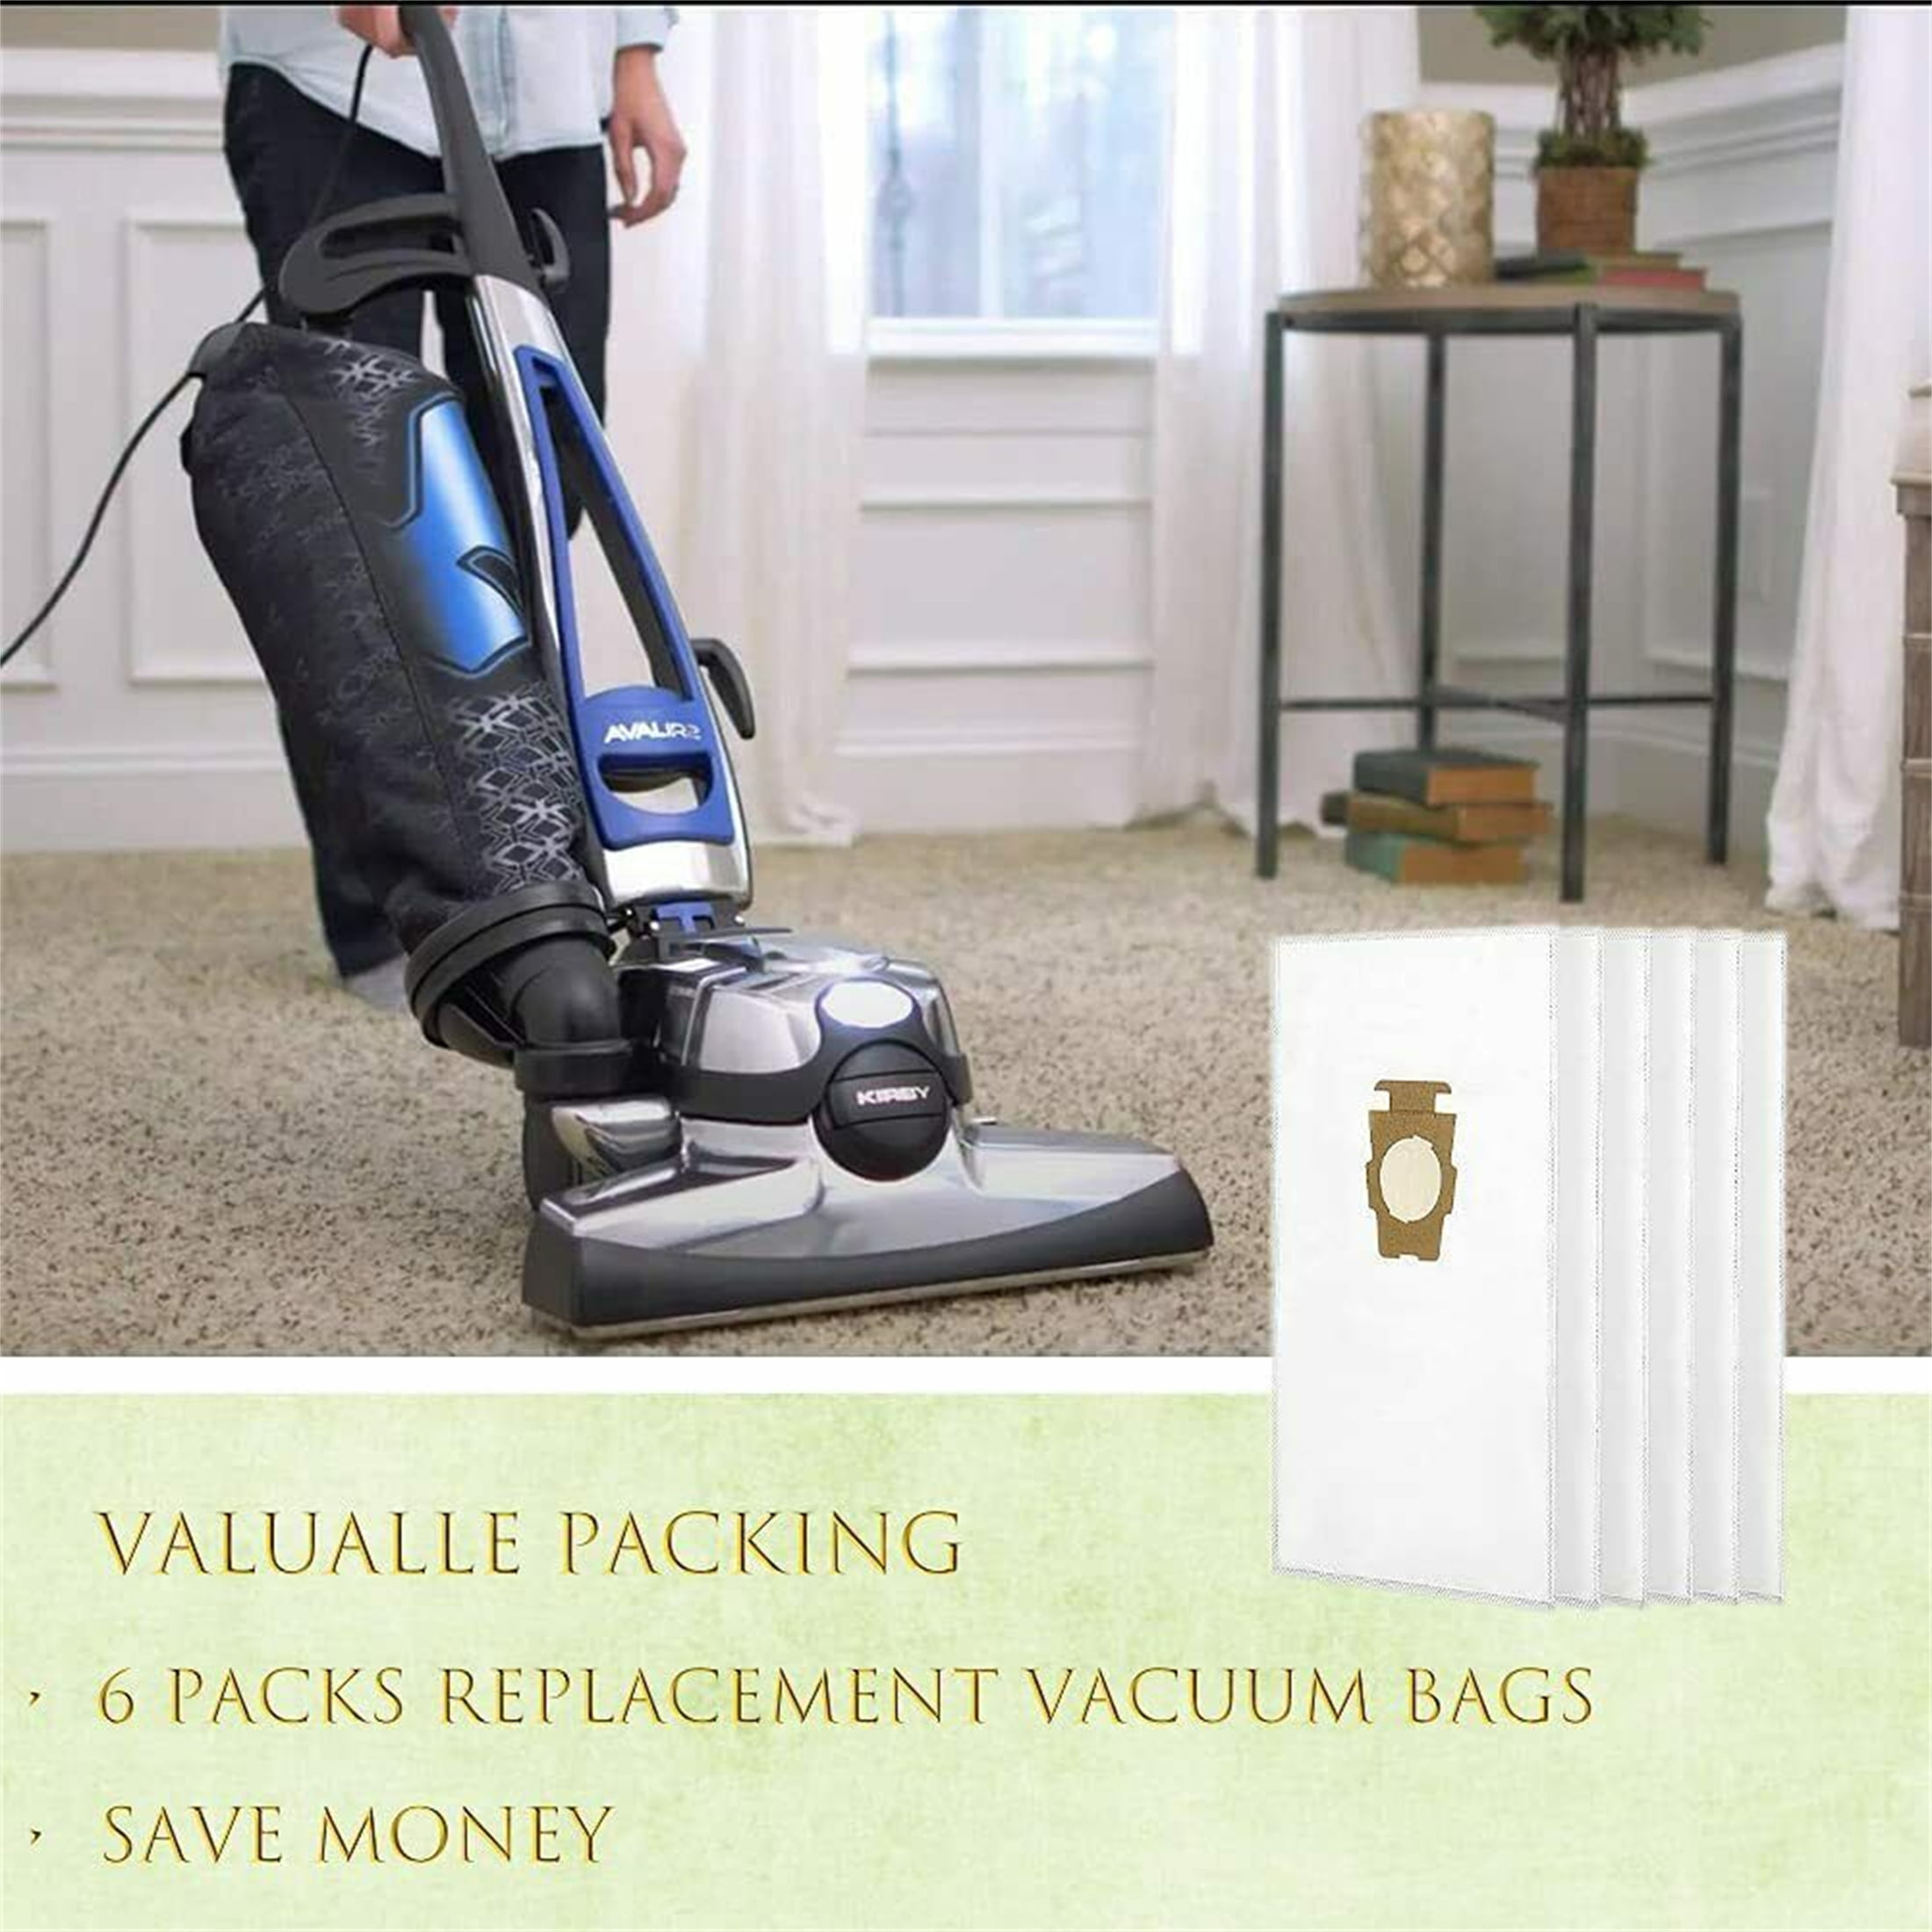 REMANUFACTURED KIRBY AVALIR 2 Vacuum Cleaner Rebuilt 25 Year Warranty Bags